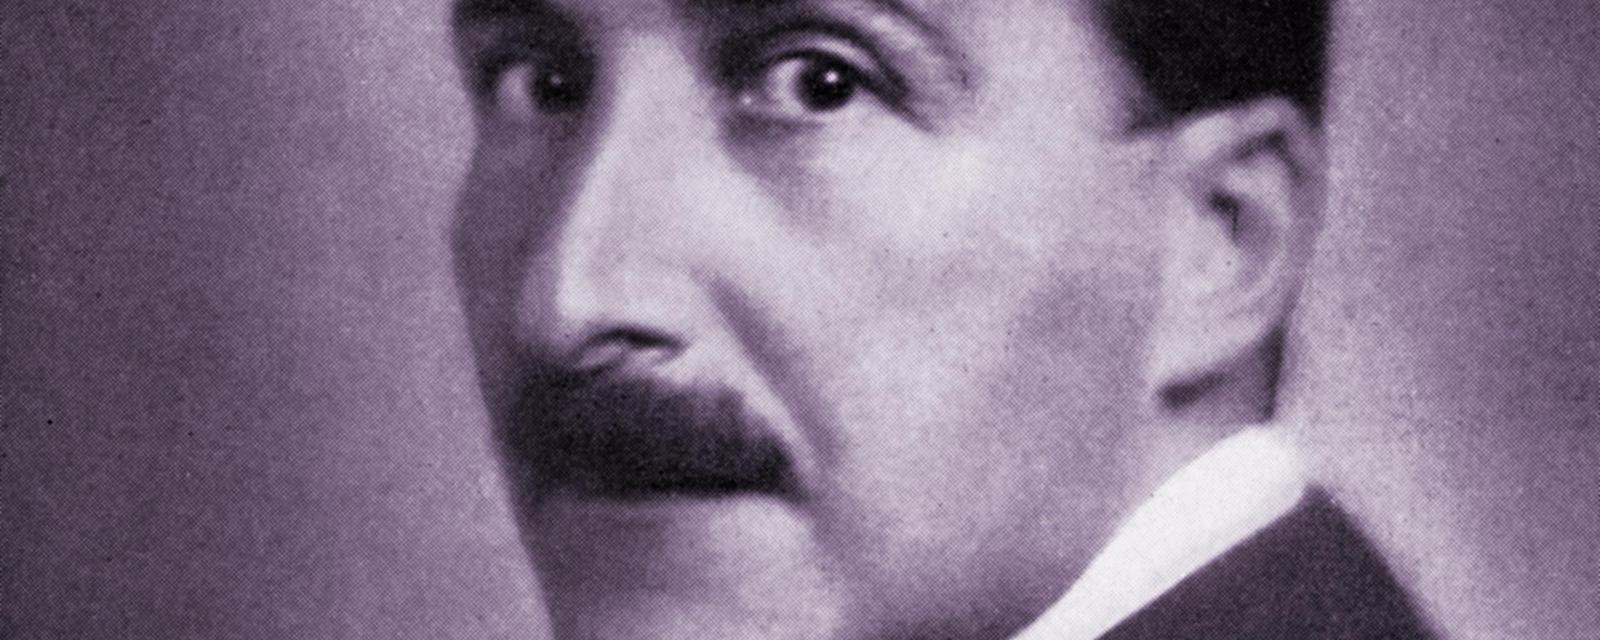 ERGYHN Stefan Zweig in 1940. Austrian novelist, playwright, journalist and biographer. 28 November 1881 - 22 February 1942.. Image shot 1940. Exact date unknown.